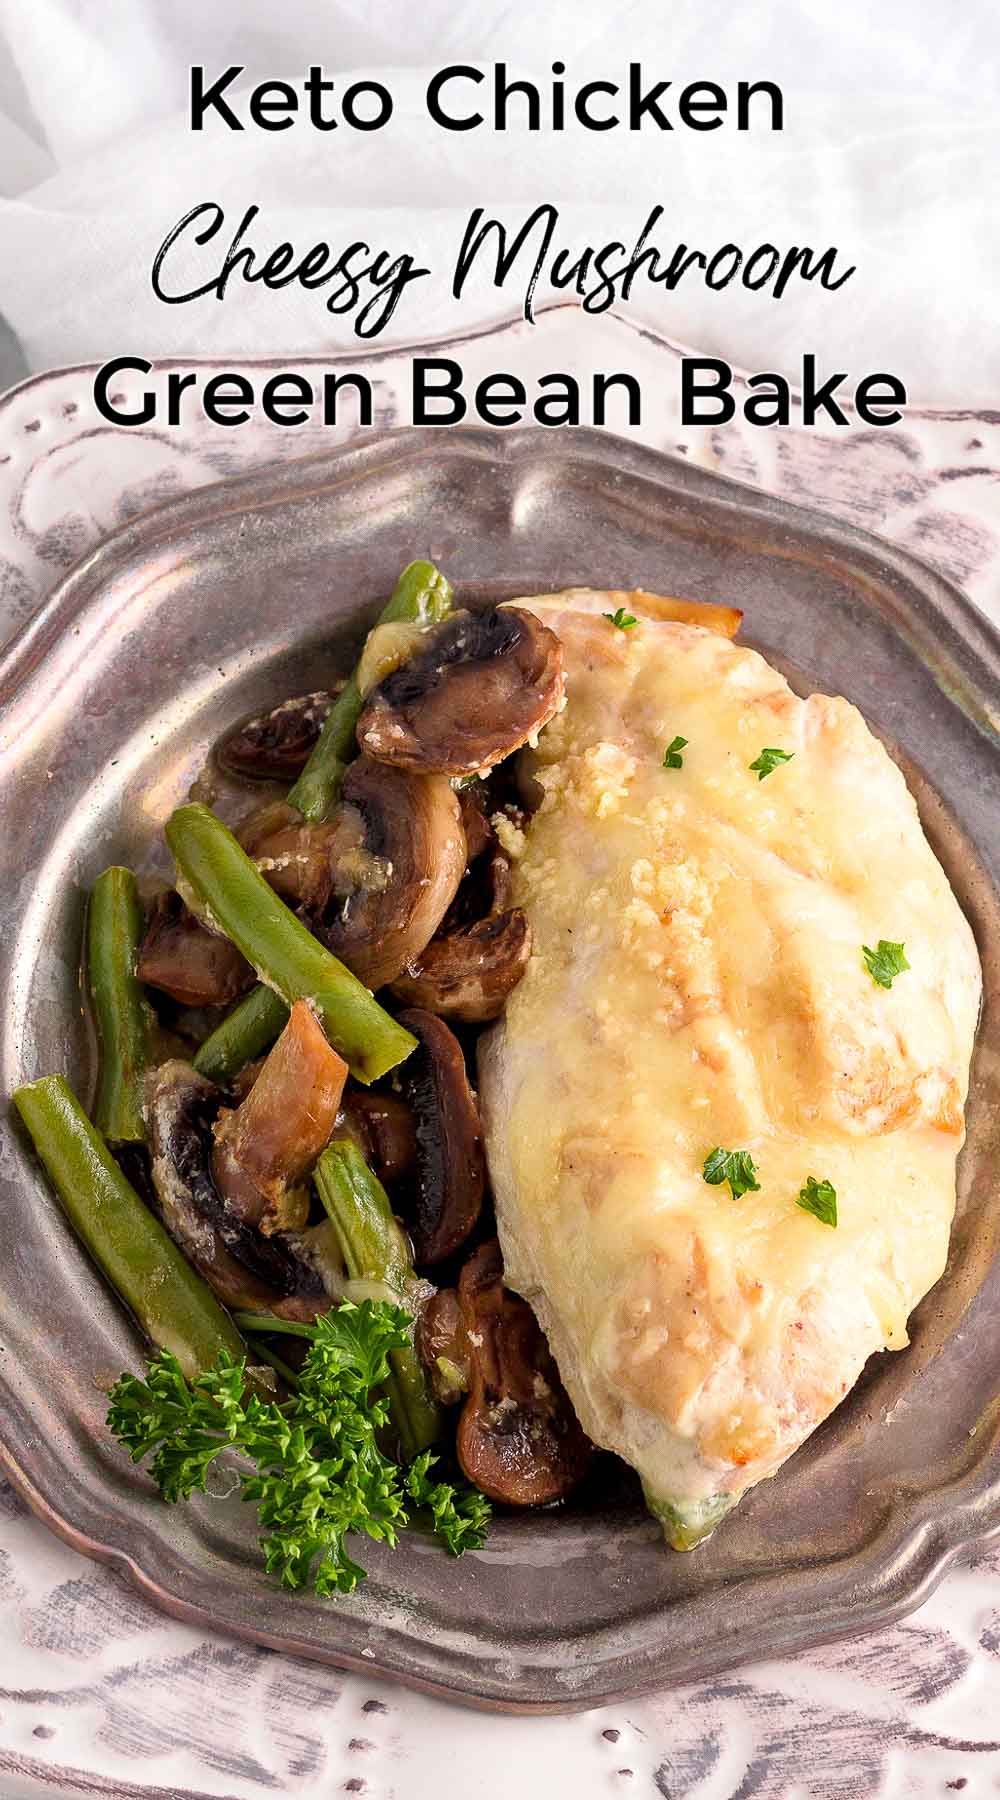 A one dish chicken mushroom green bean entrée in a cream sauce